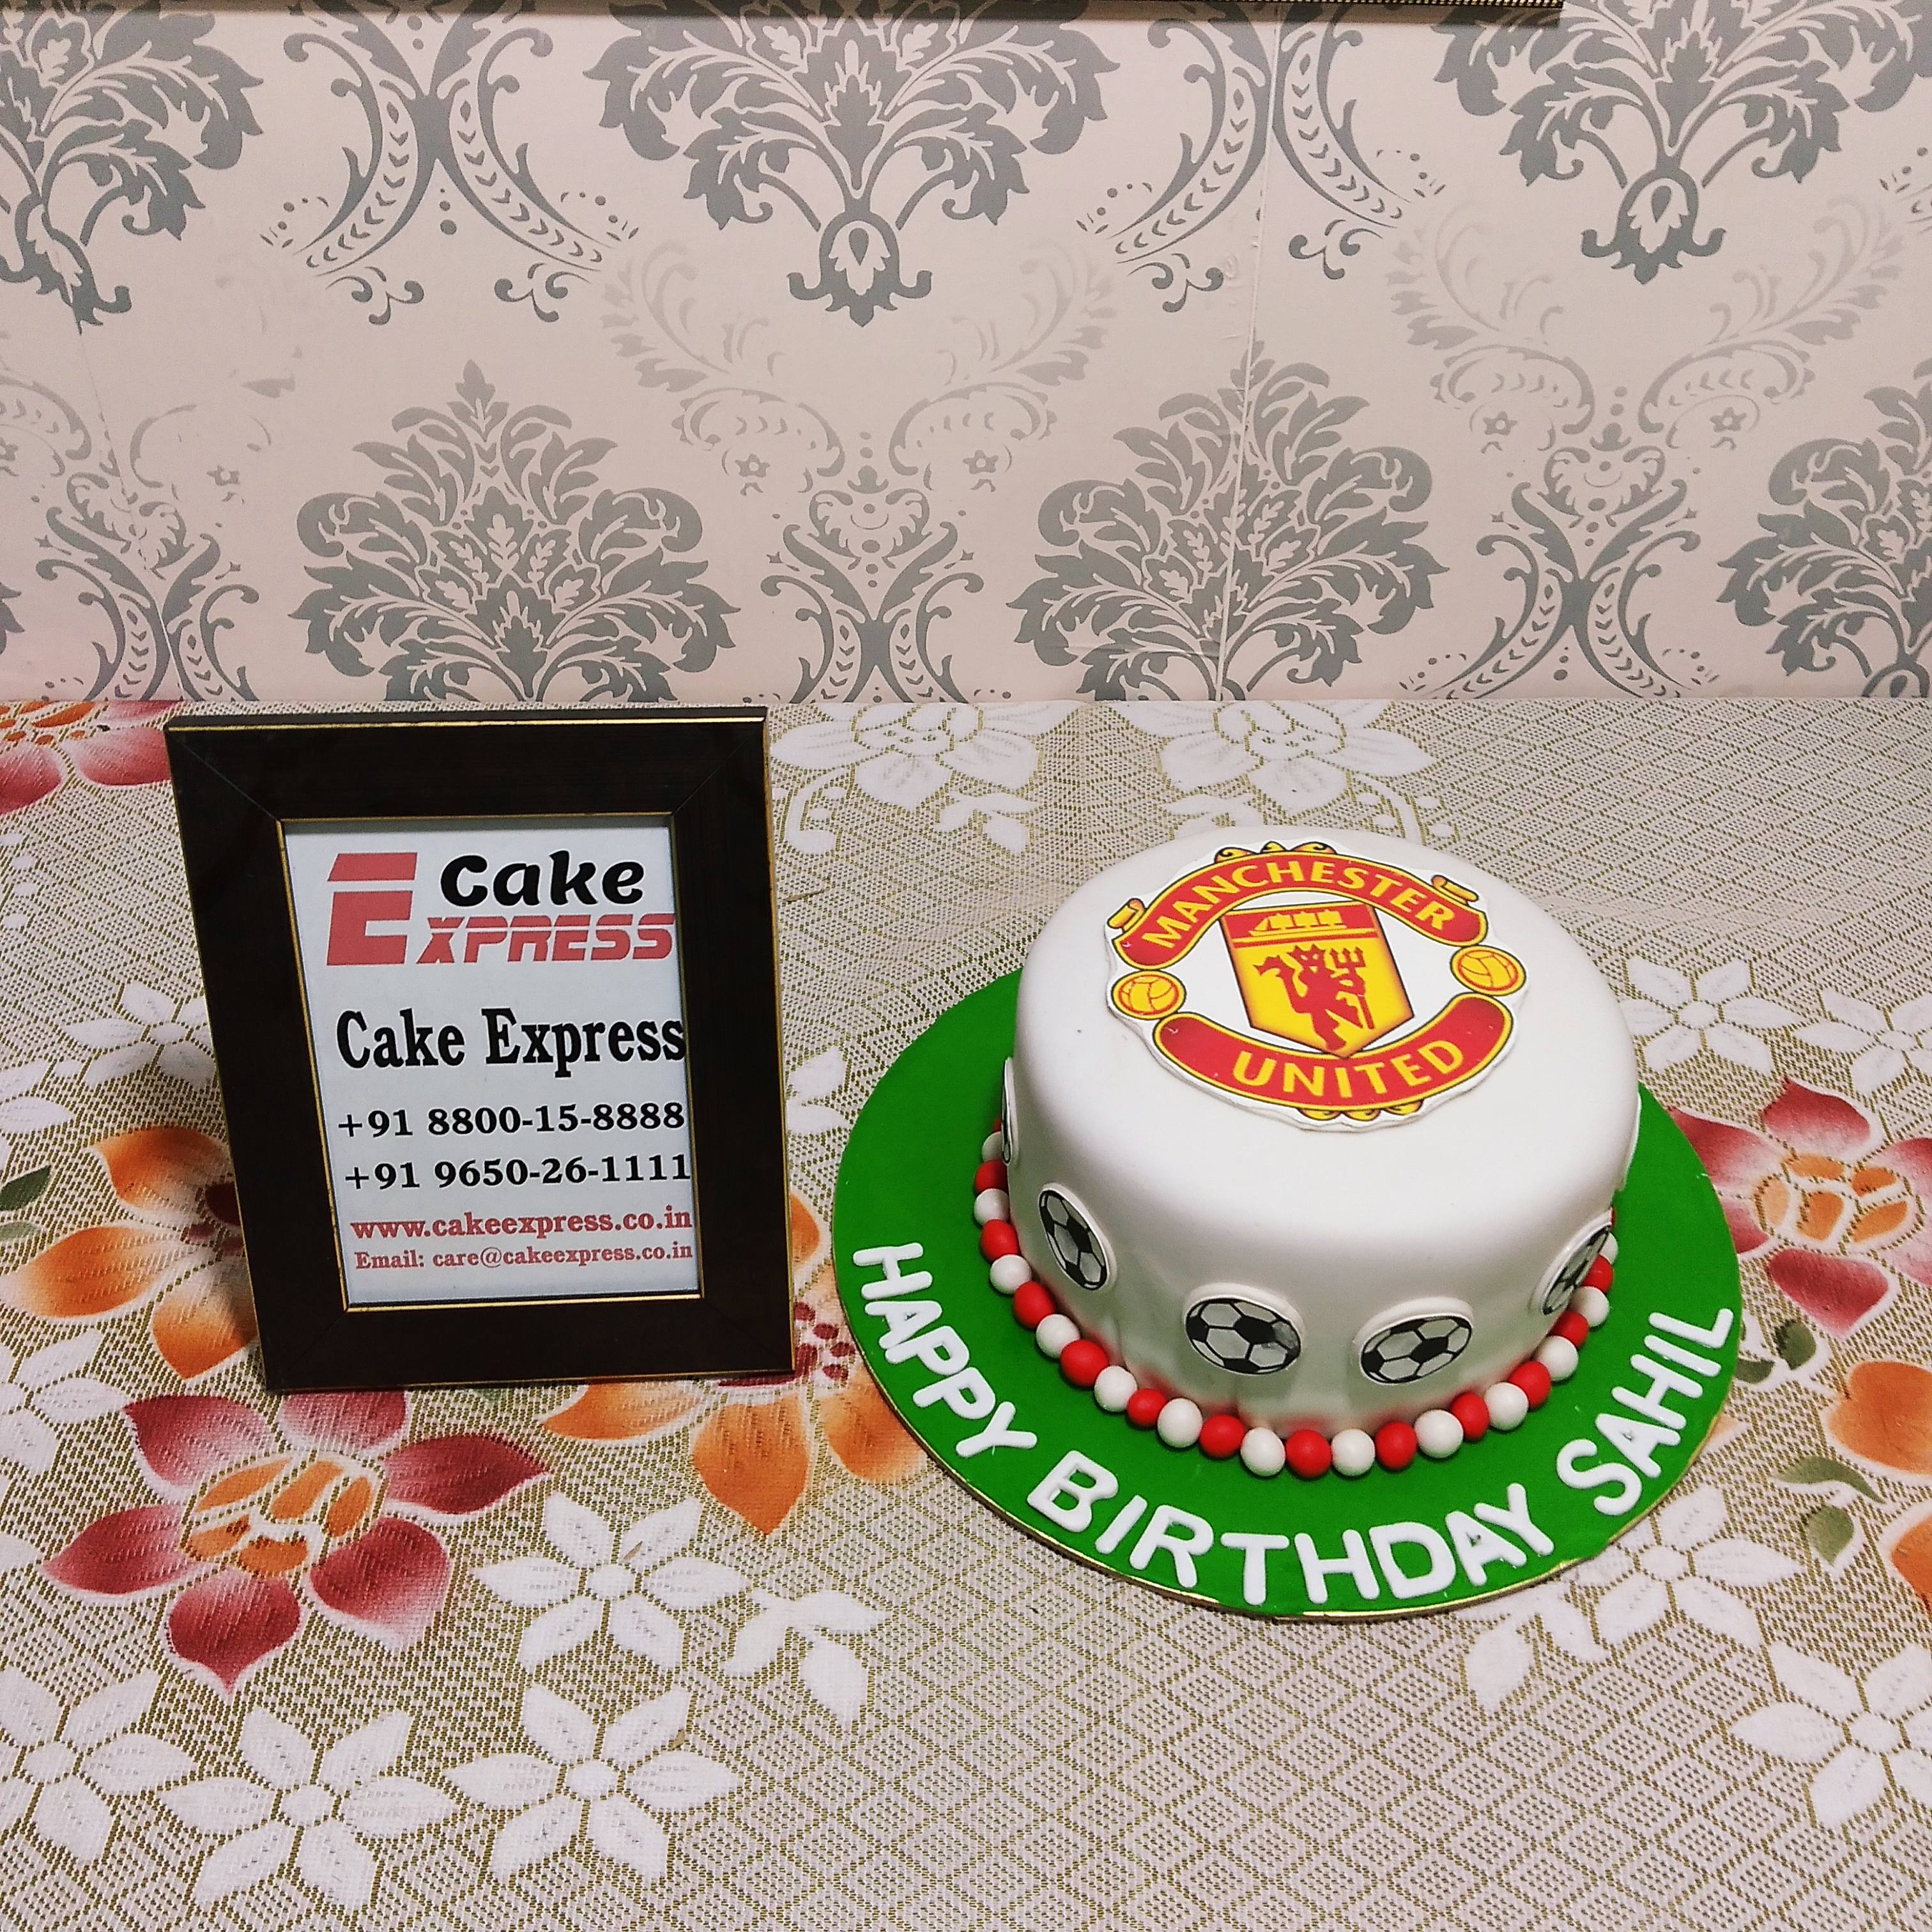 Manchester United Cake | Manchester United Cake Tutorial - YouTube